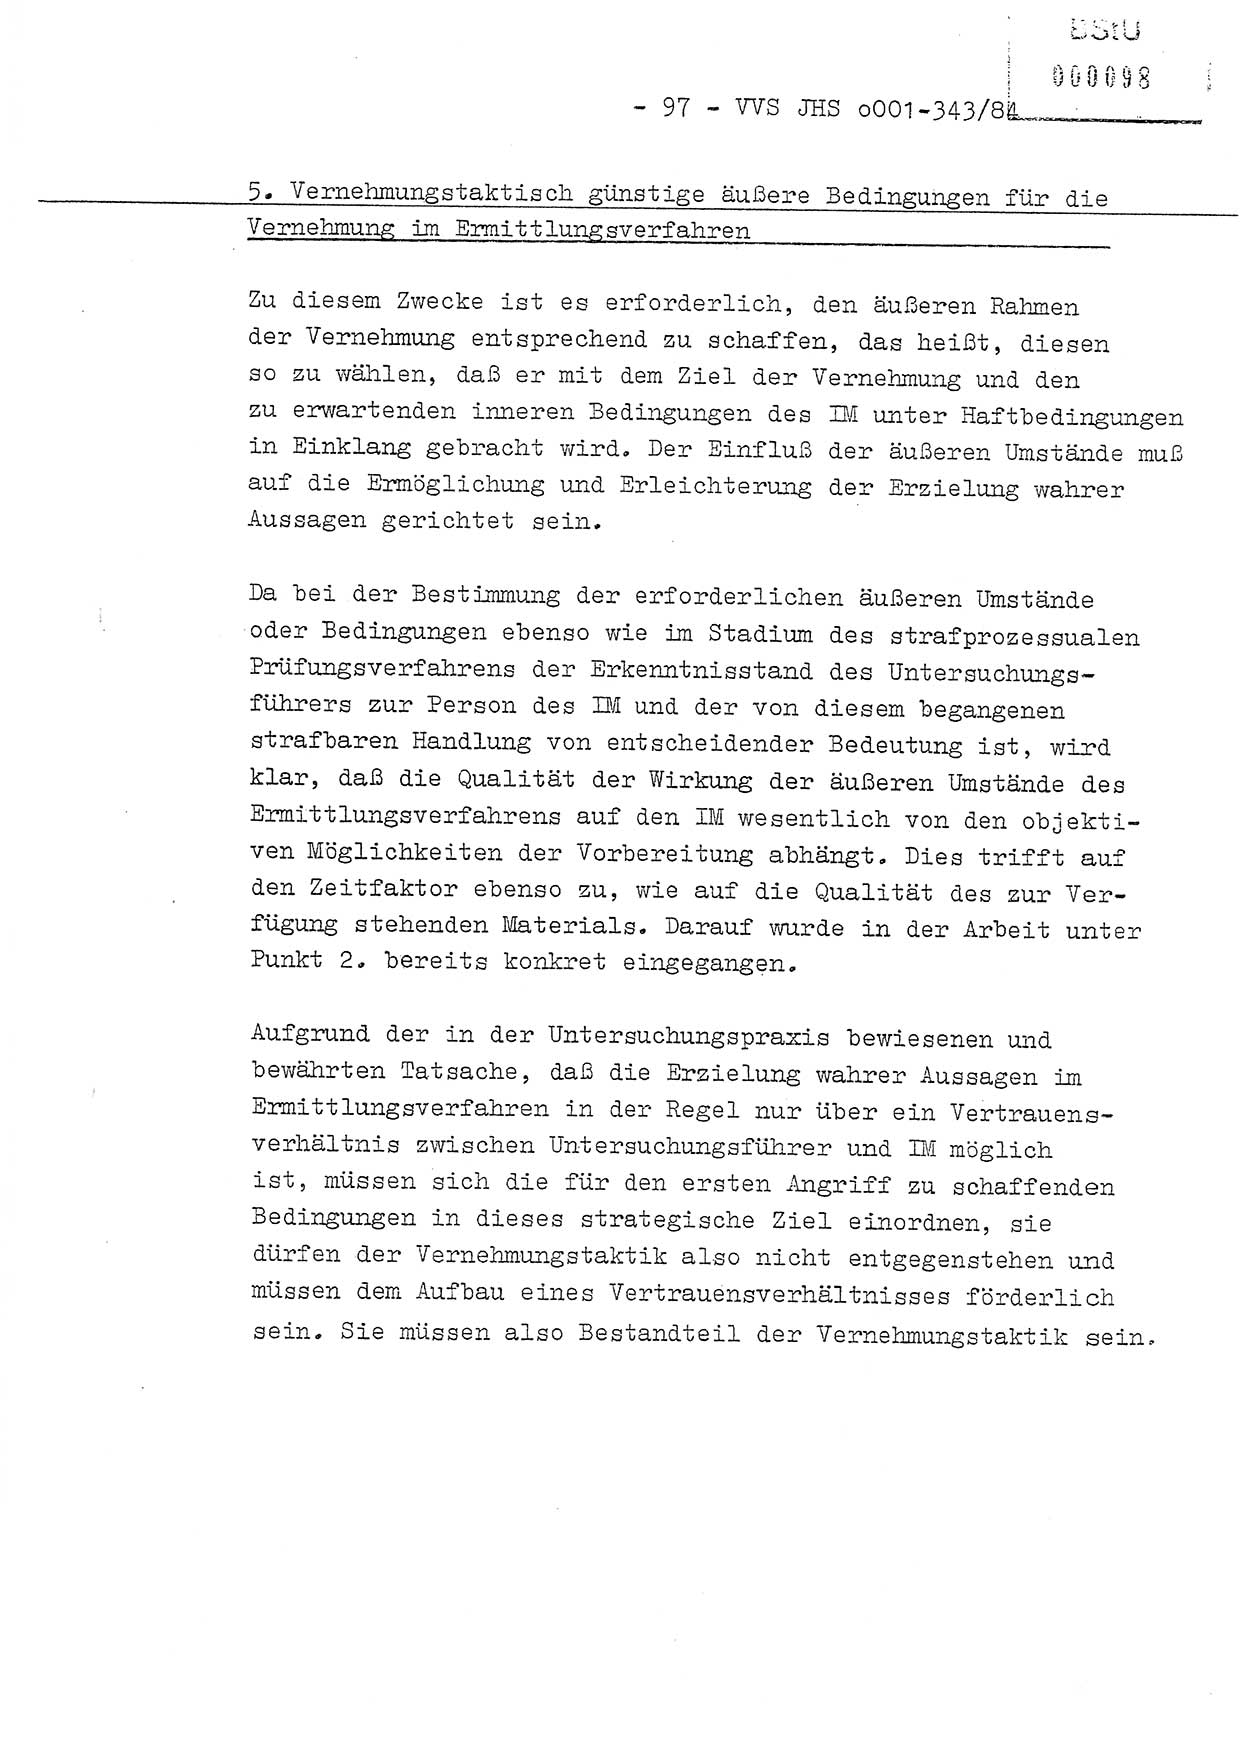 Diplomarbeit, Oberleutnant Bernd Michael (HA Ⅸ/5), Oberleutnant Peter Felber (HA IX/5), Ministerium für Staatssicherheit (MfS) [Deutsche Demokratische Republik (DDR)], Juristische Hochschule (JHS), Vertrauliche Verschlußsache (VVS) o001-343/84, Potsdam 1985, Seite 97 (Dipl.-Arb. MfS DDR JHS VVS o001-343/84 1985, S. 97)